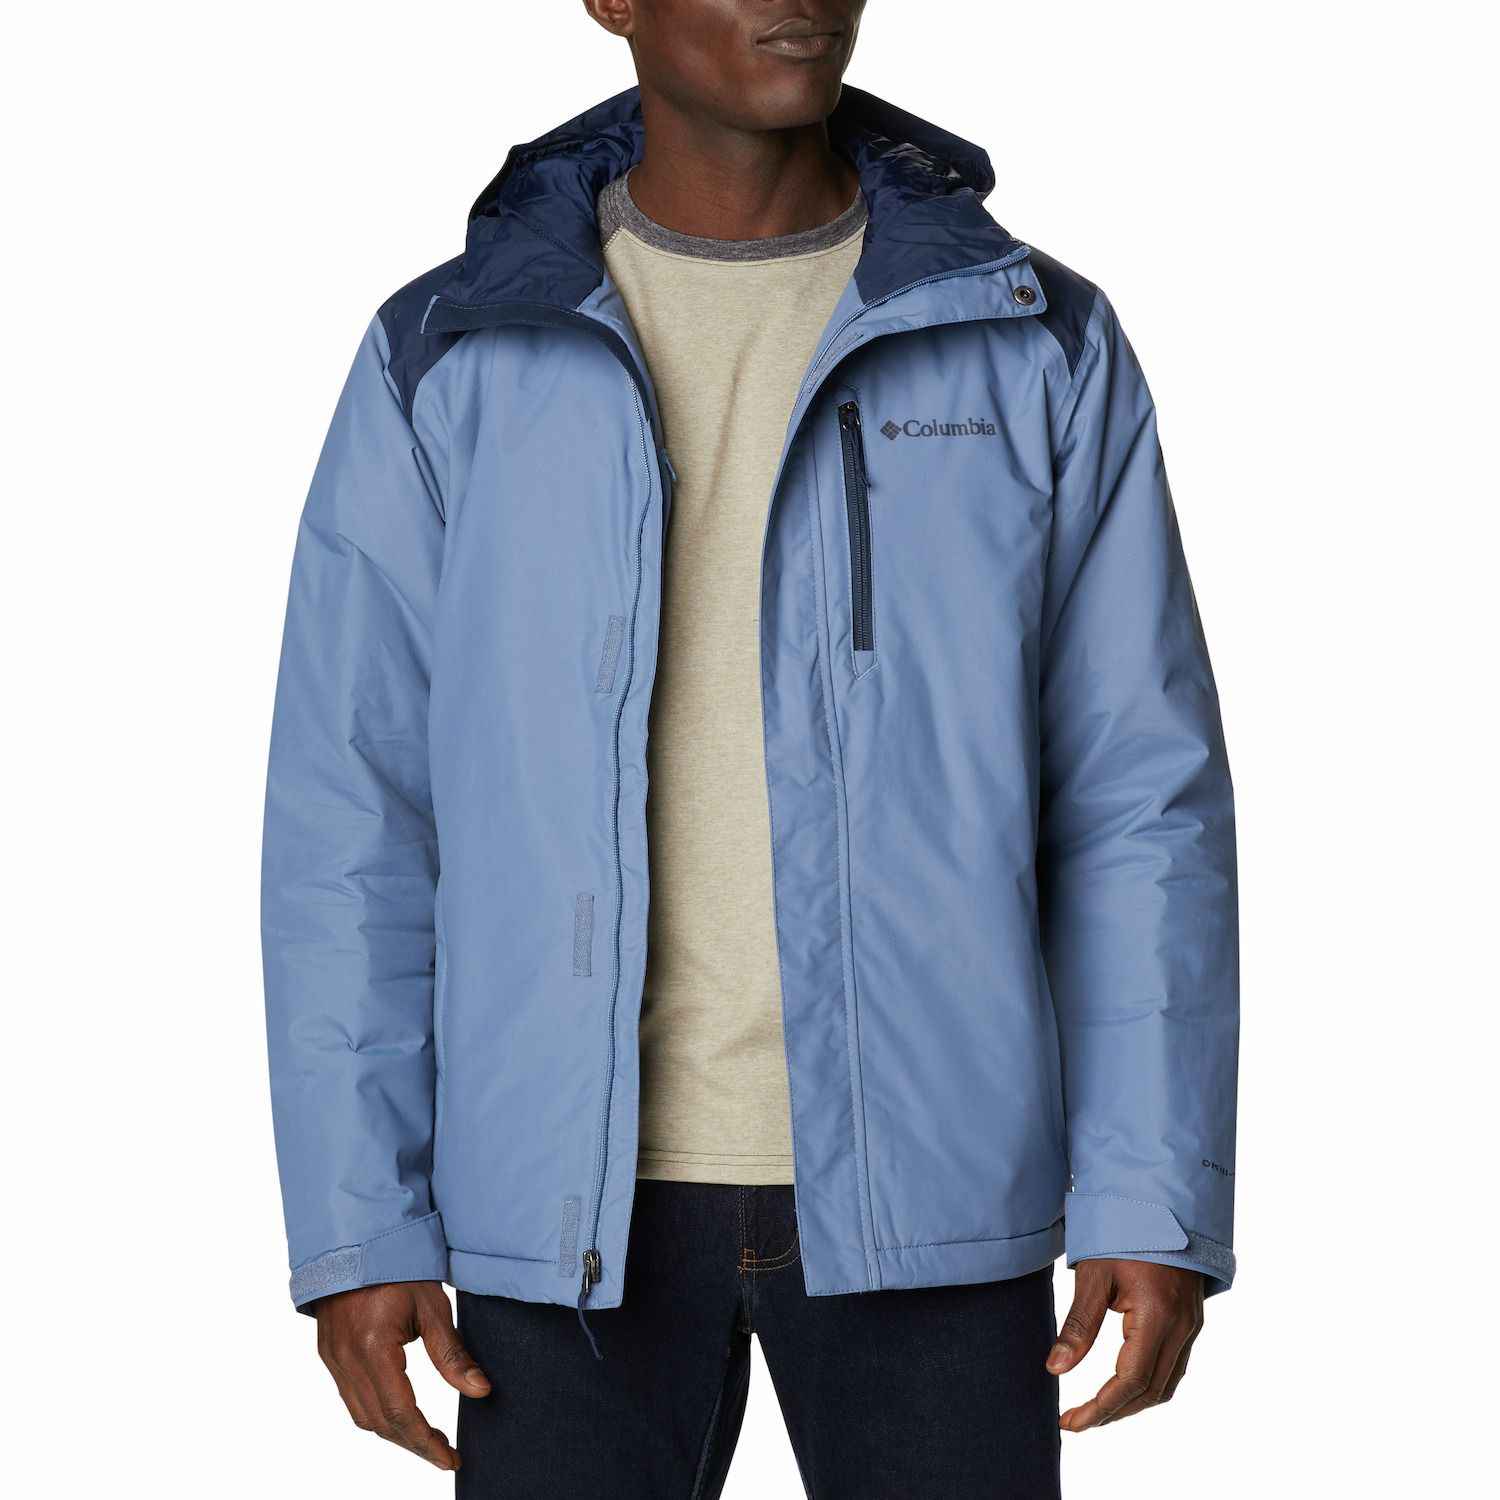 tipton pass insulated jacket